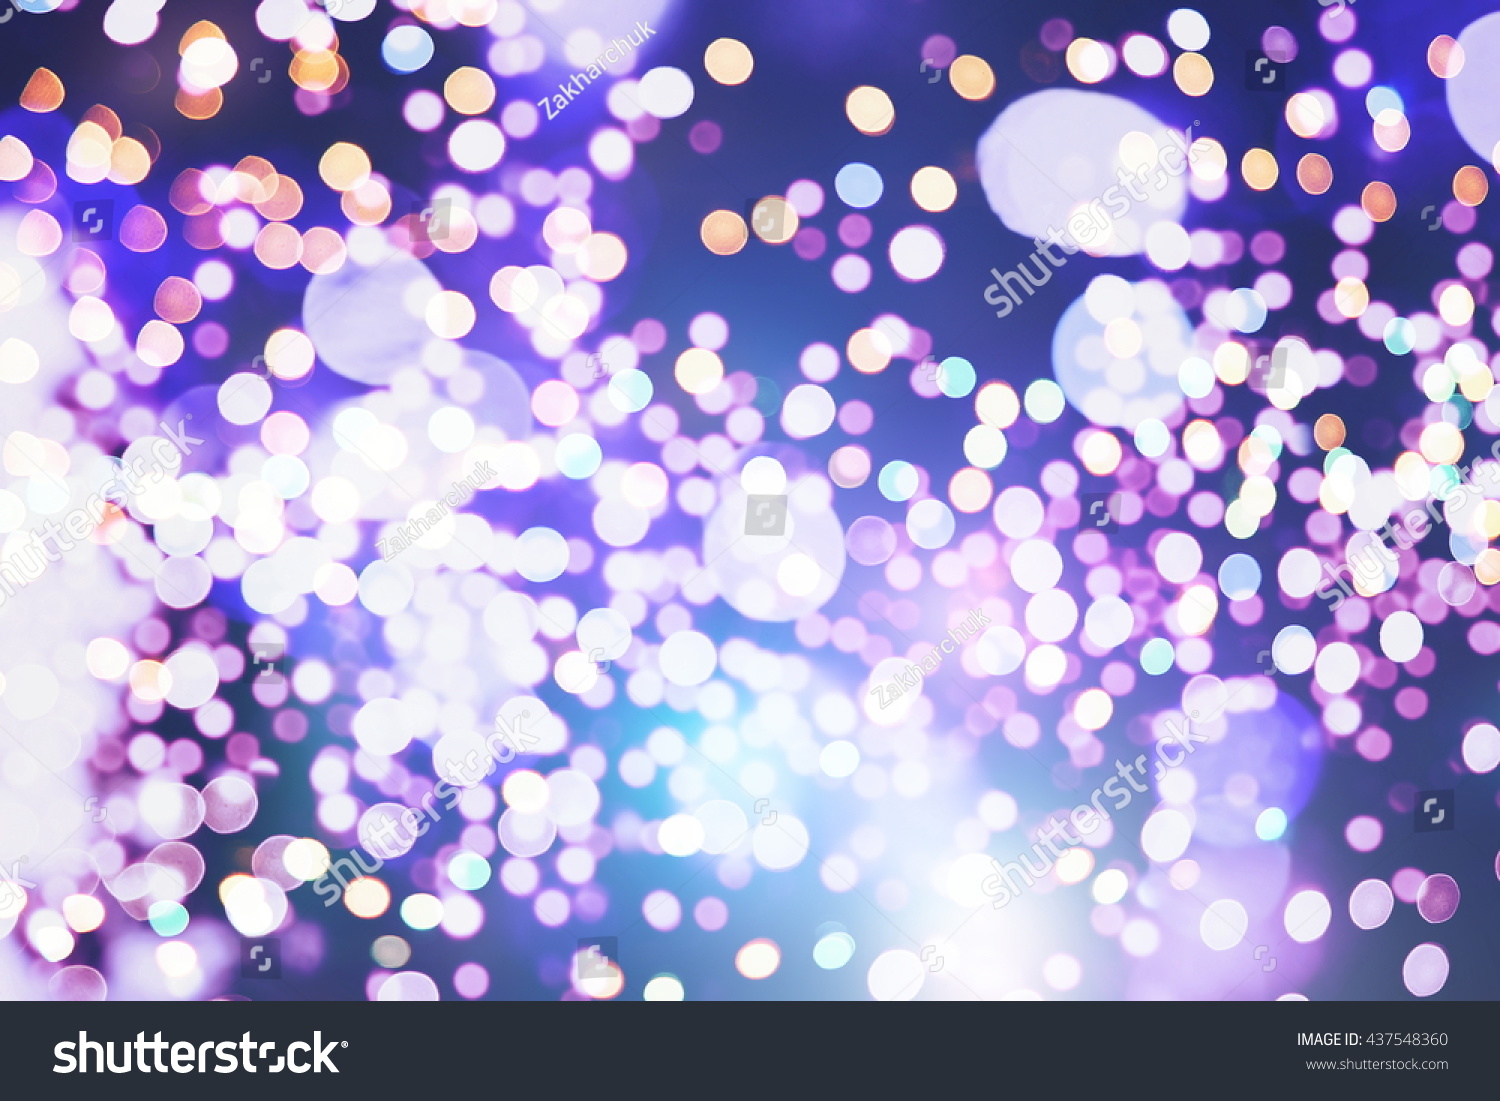 Lights Background Stock Photo 437548360 | Shutterstock